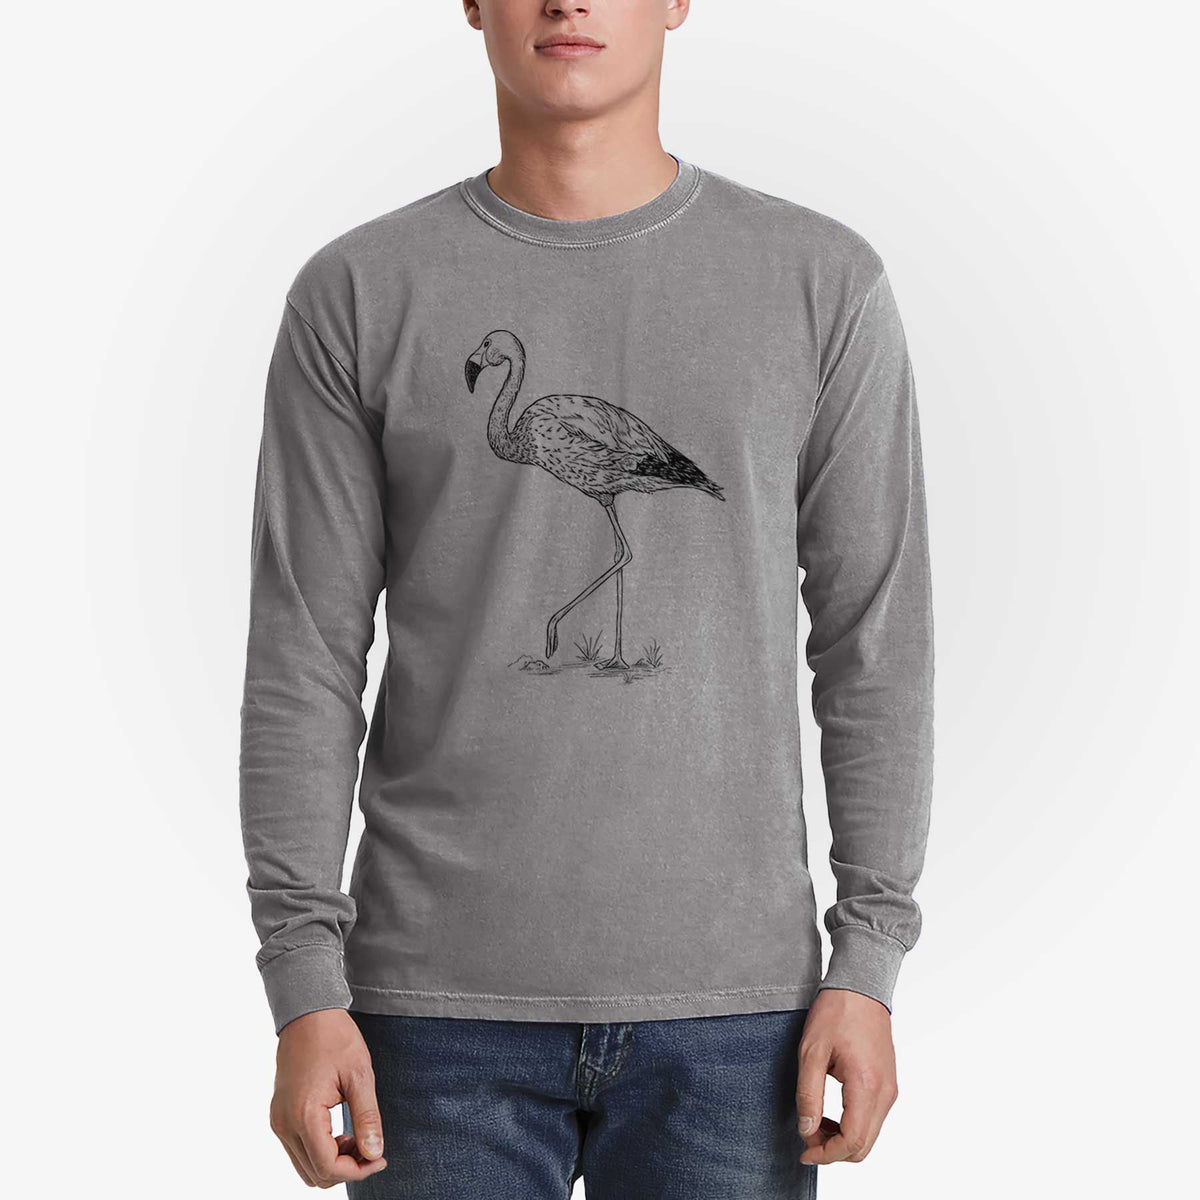 Andean Flamingo - Phoenicoparrus andinus - Heavyweight 100% Cotton Long Sleeve